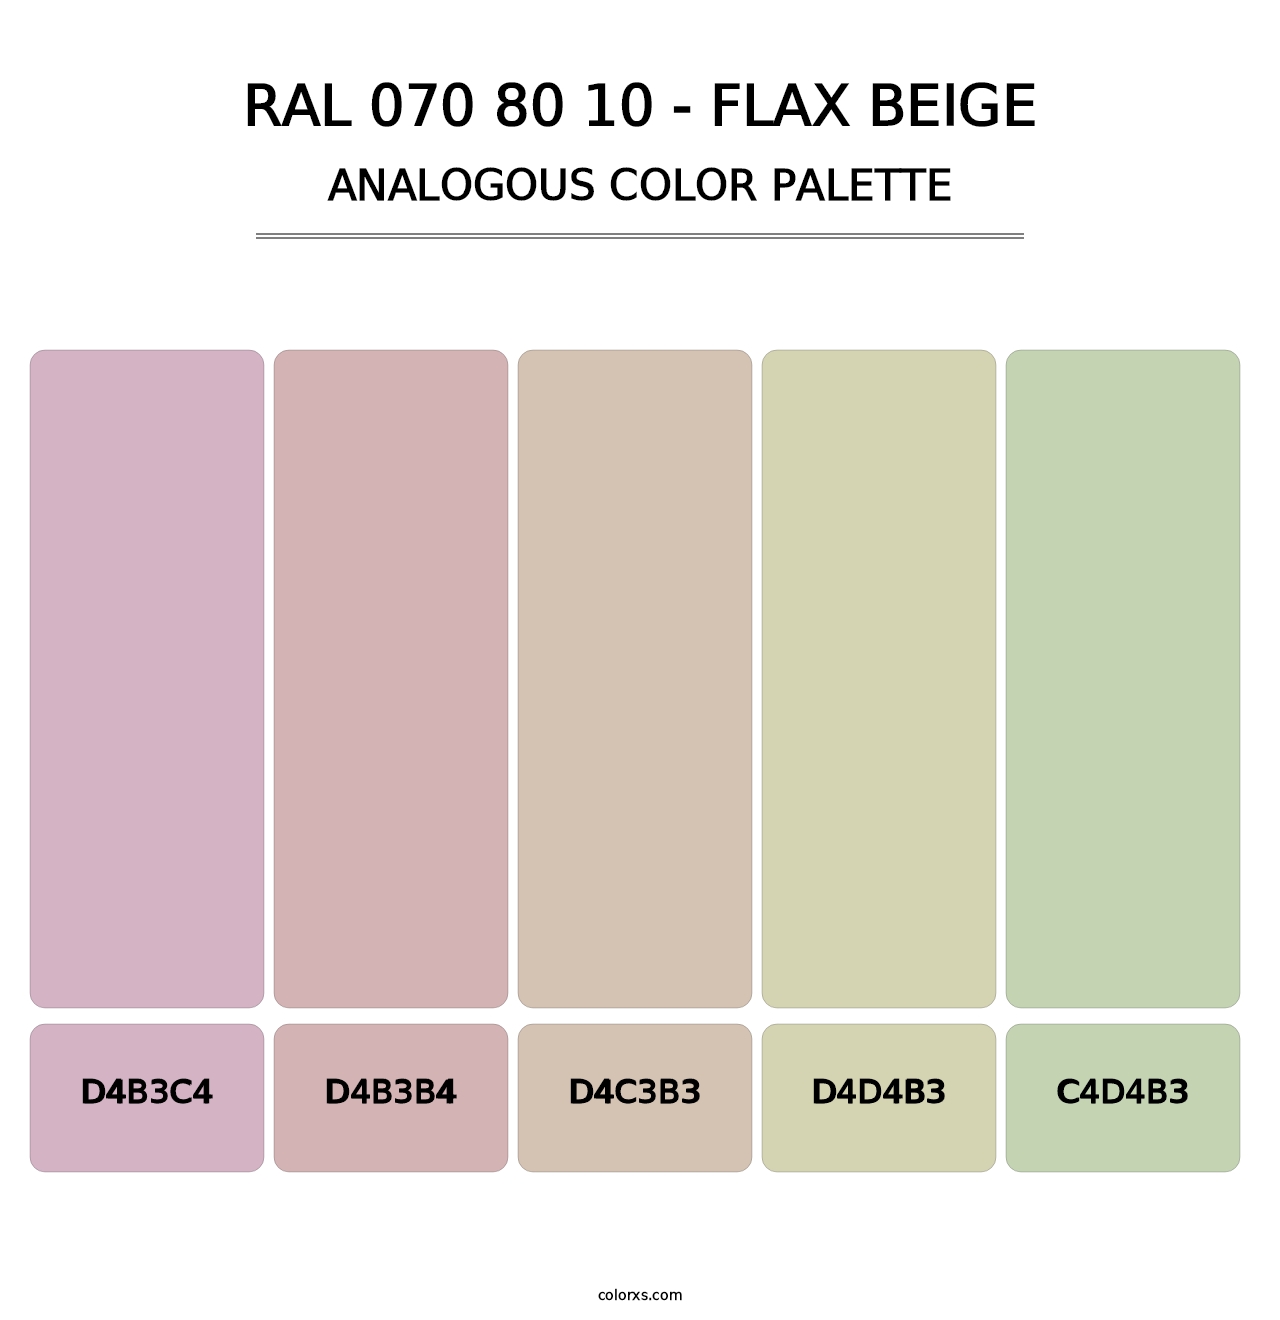 RAL 070 80 10 - Flax Beige - Analogous Color Palette